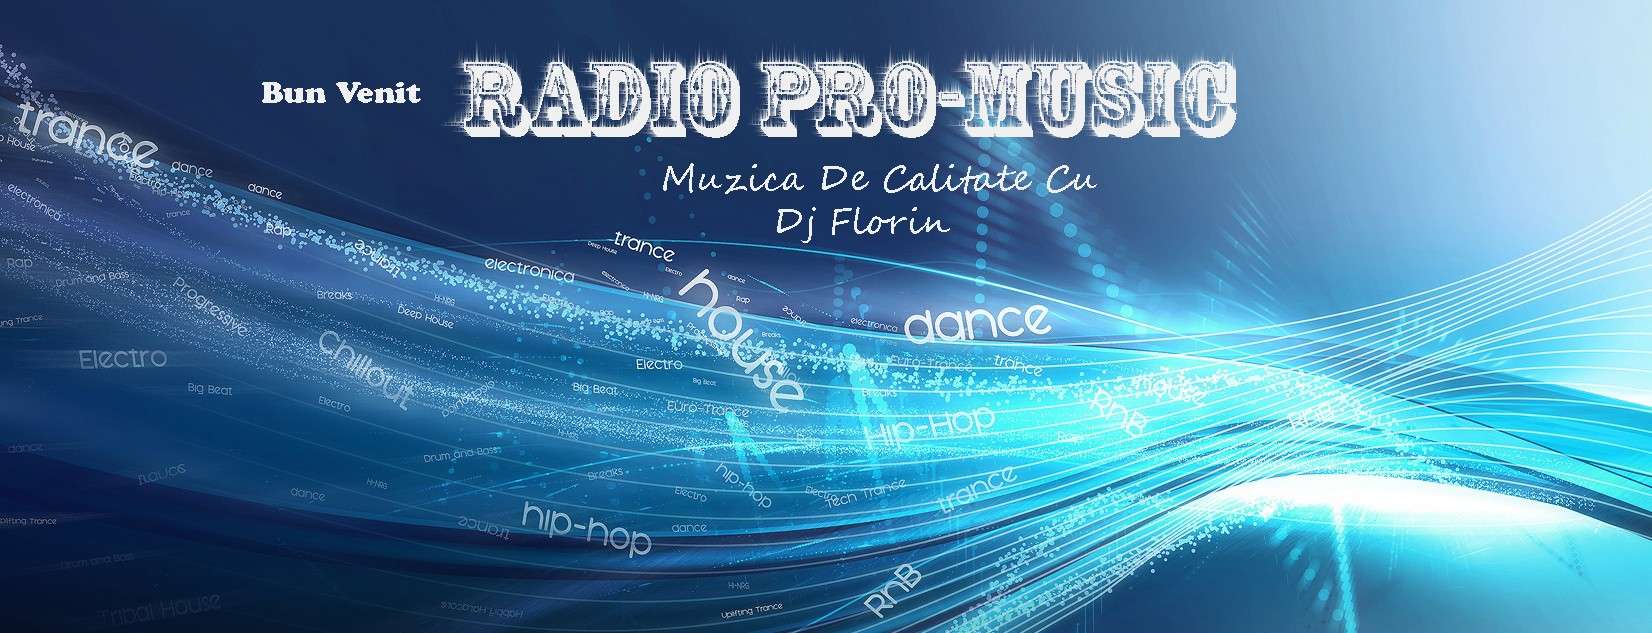 Radio Pro-Music